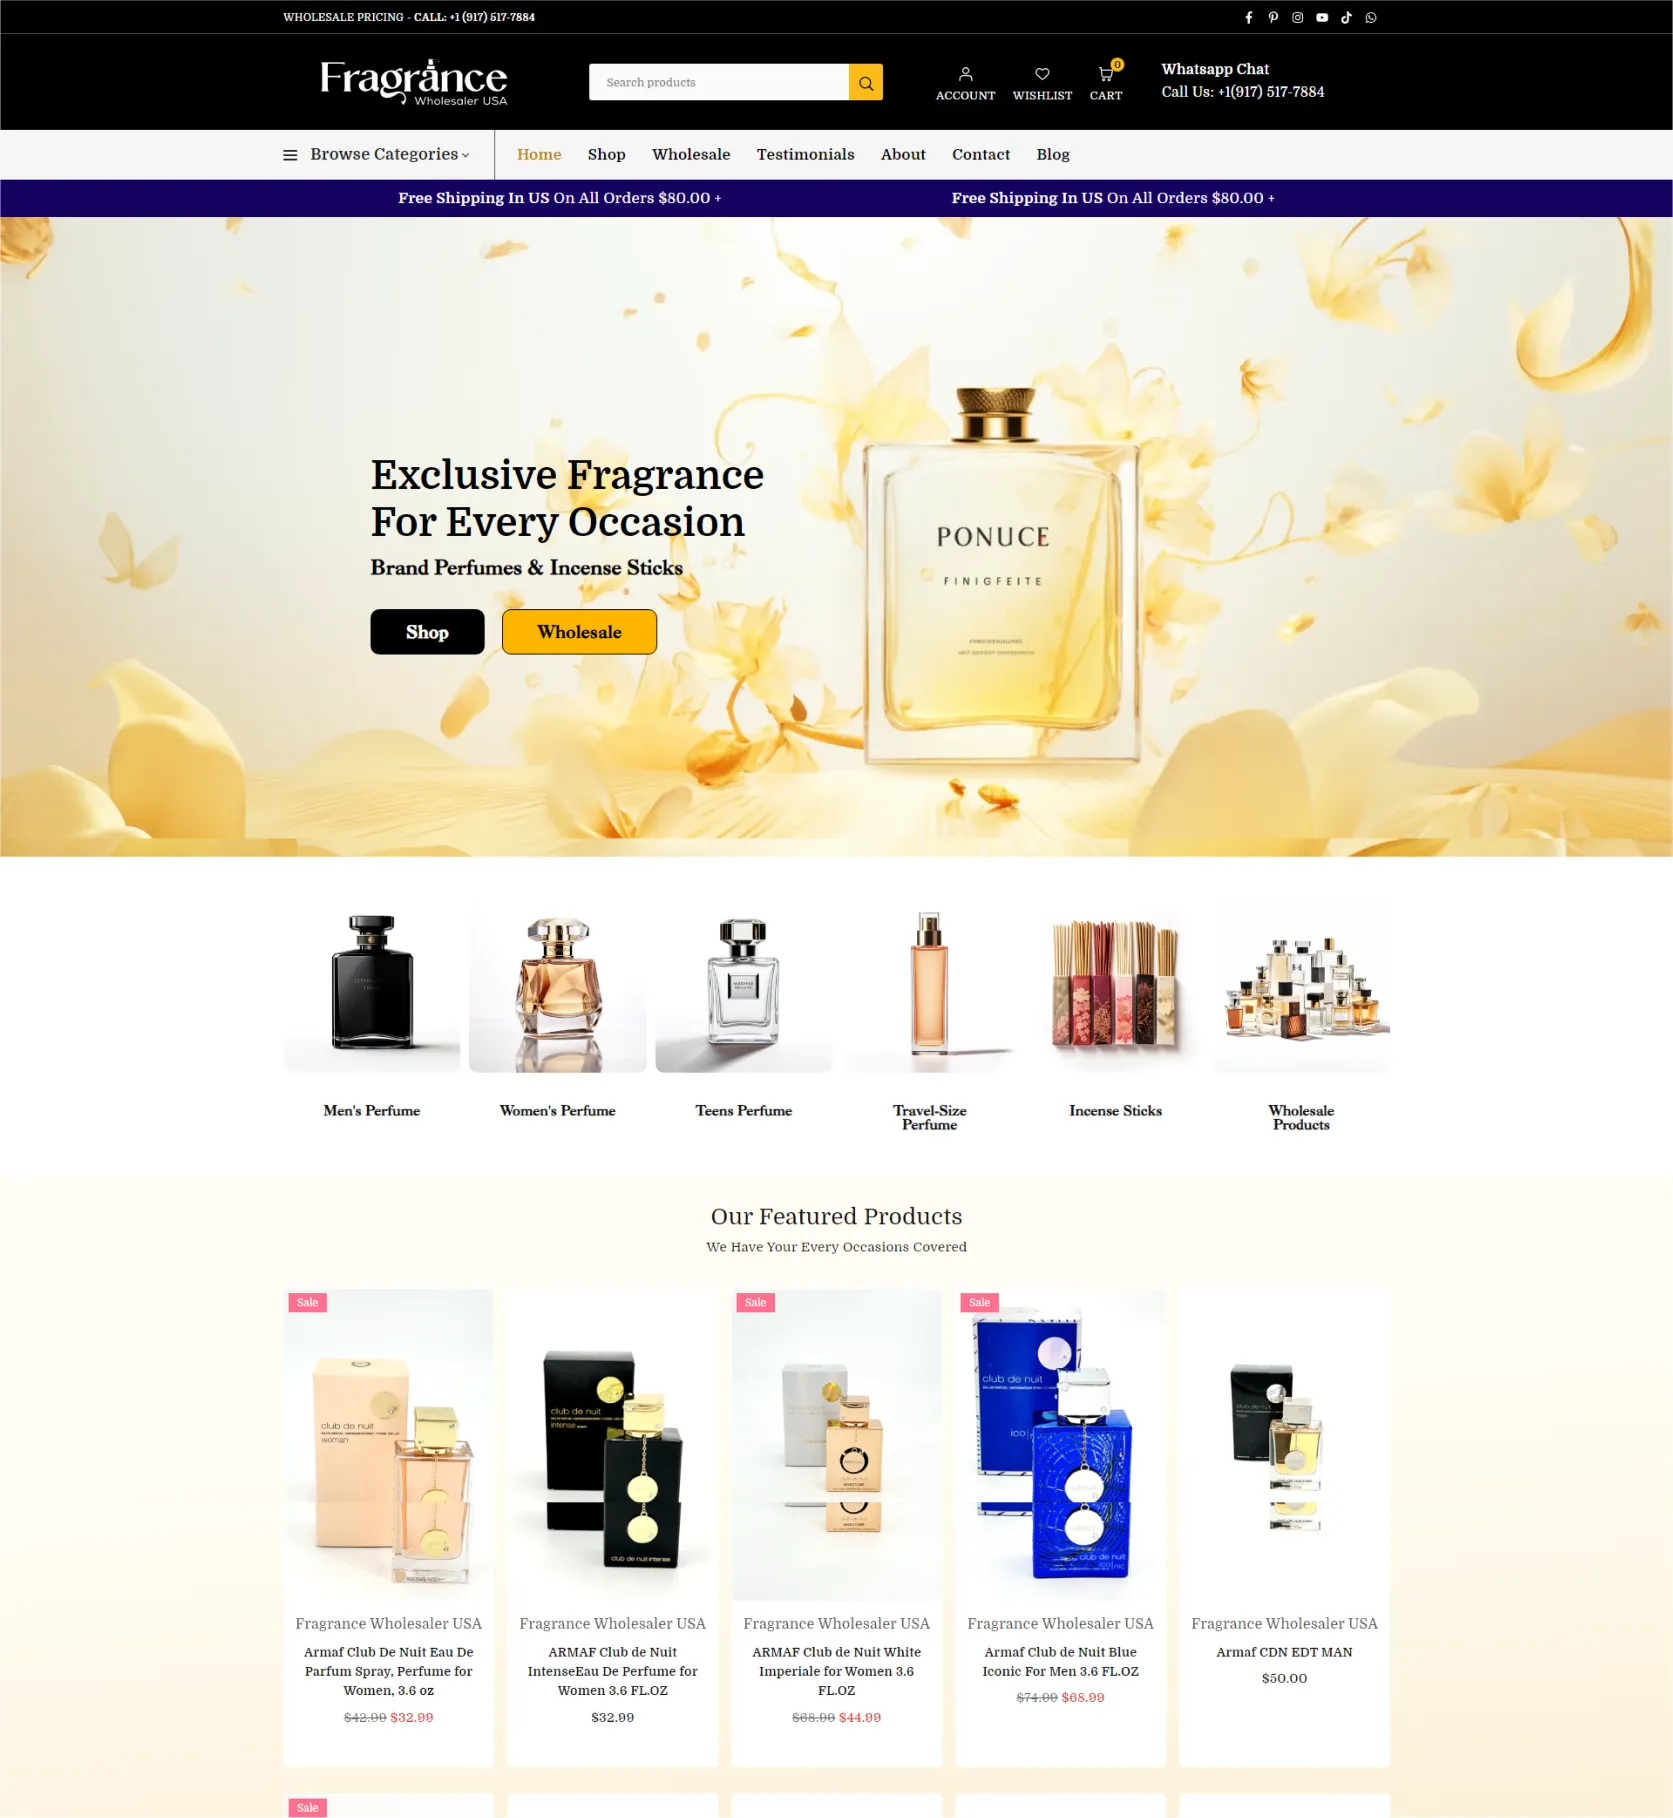 Custom Shopify Website